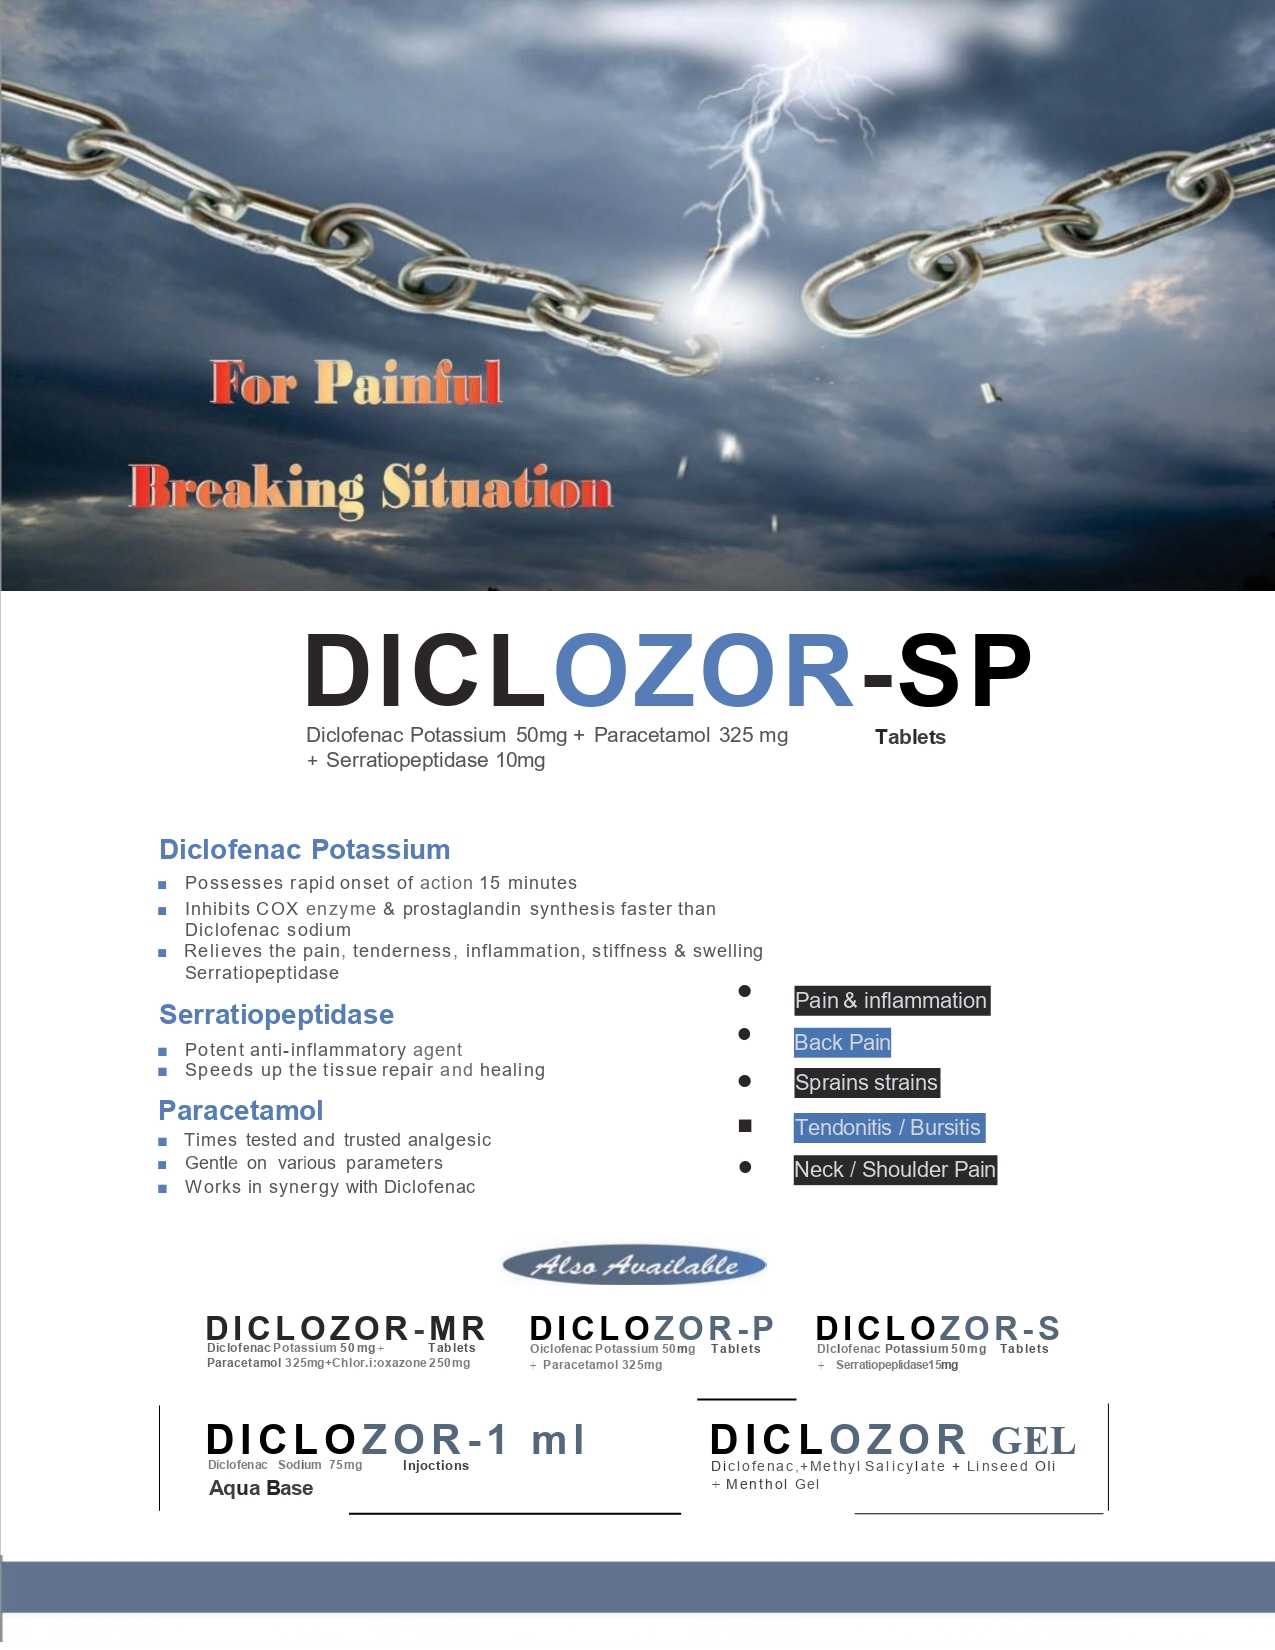 Diclozor-MR